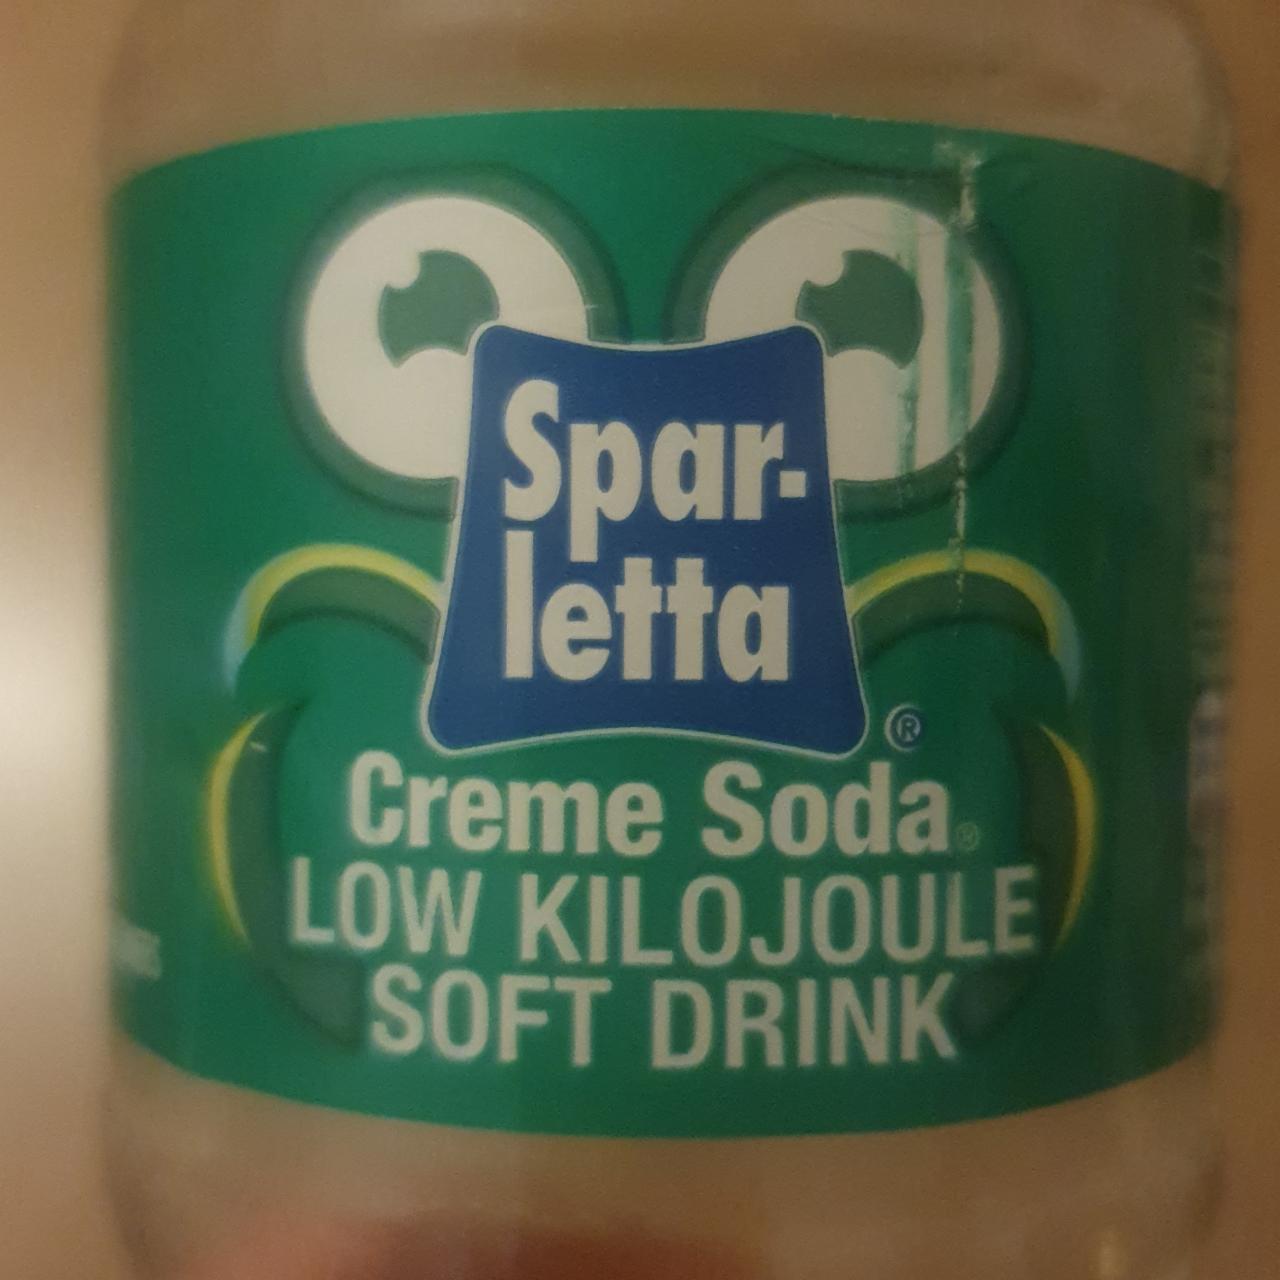 Fotografie - Creme soda soft Drink Sparletta